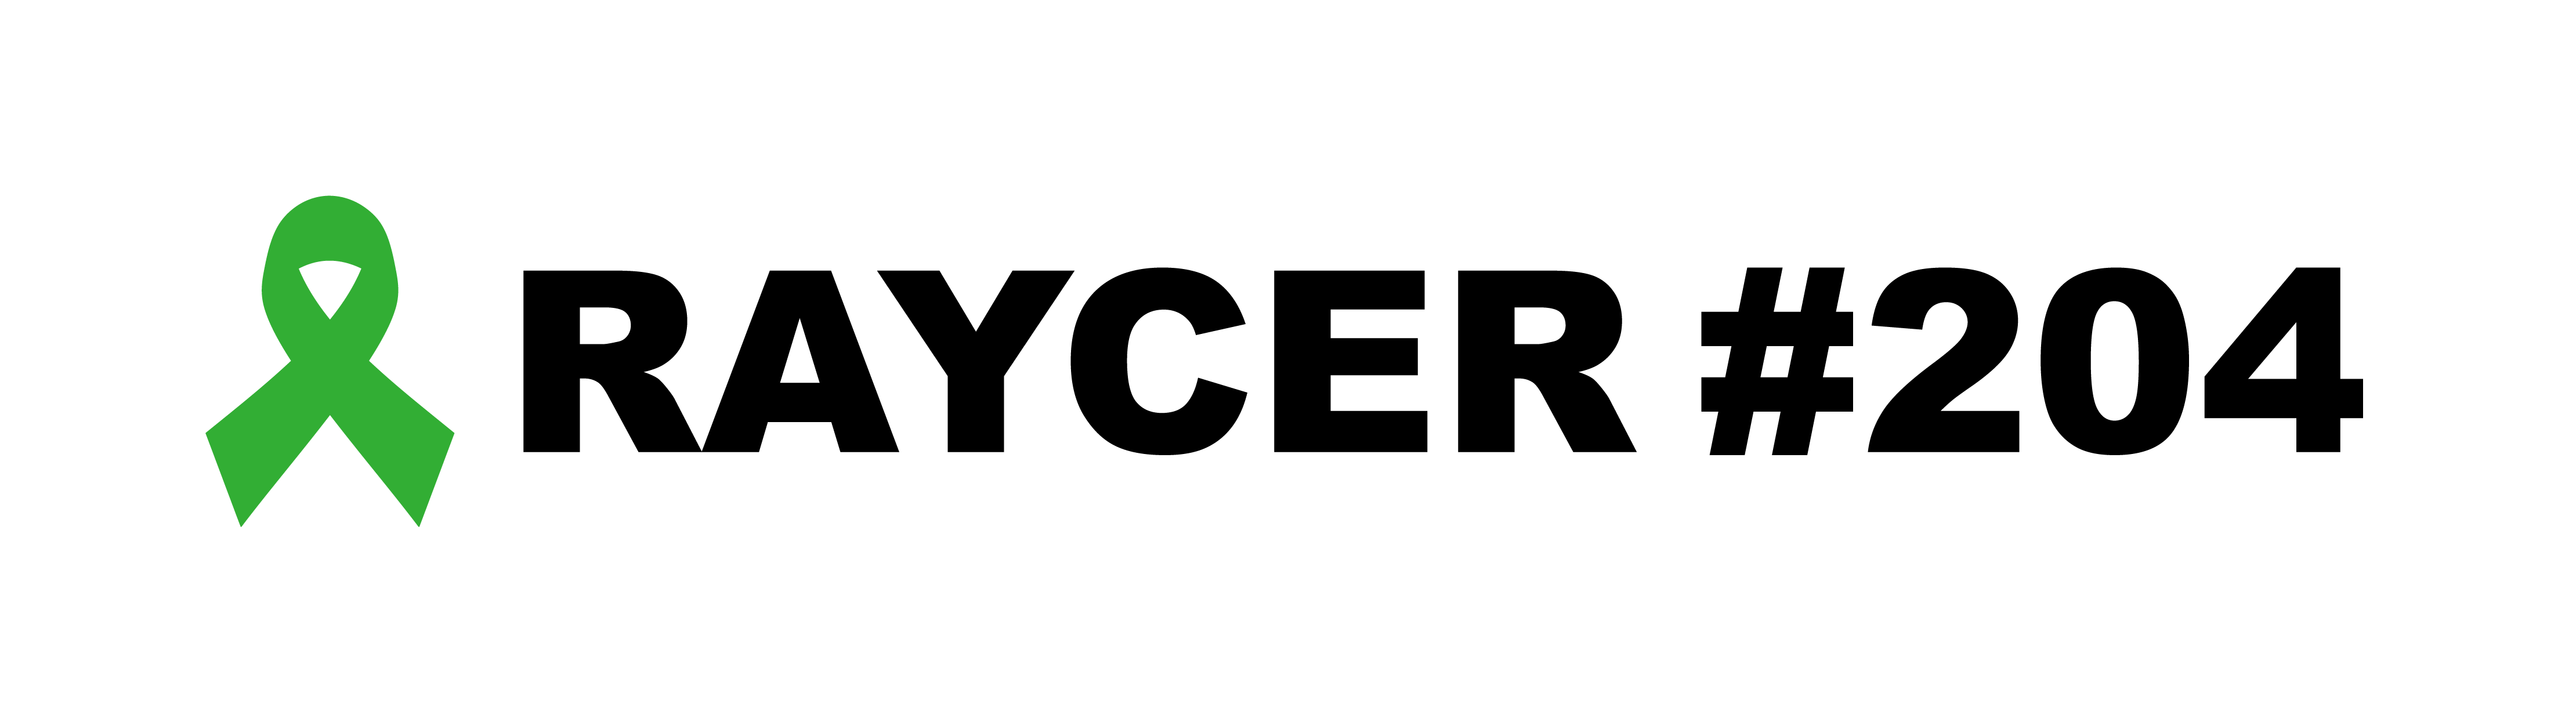 Raycer 204